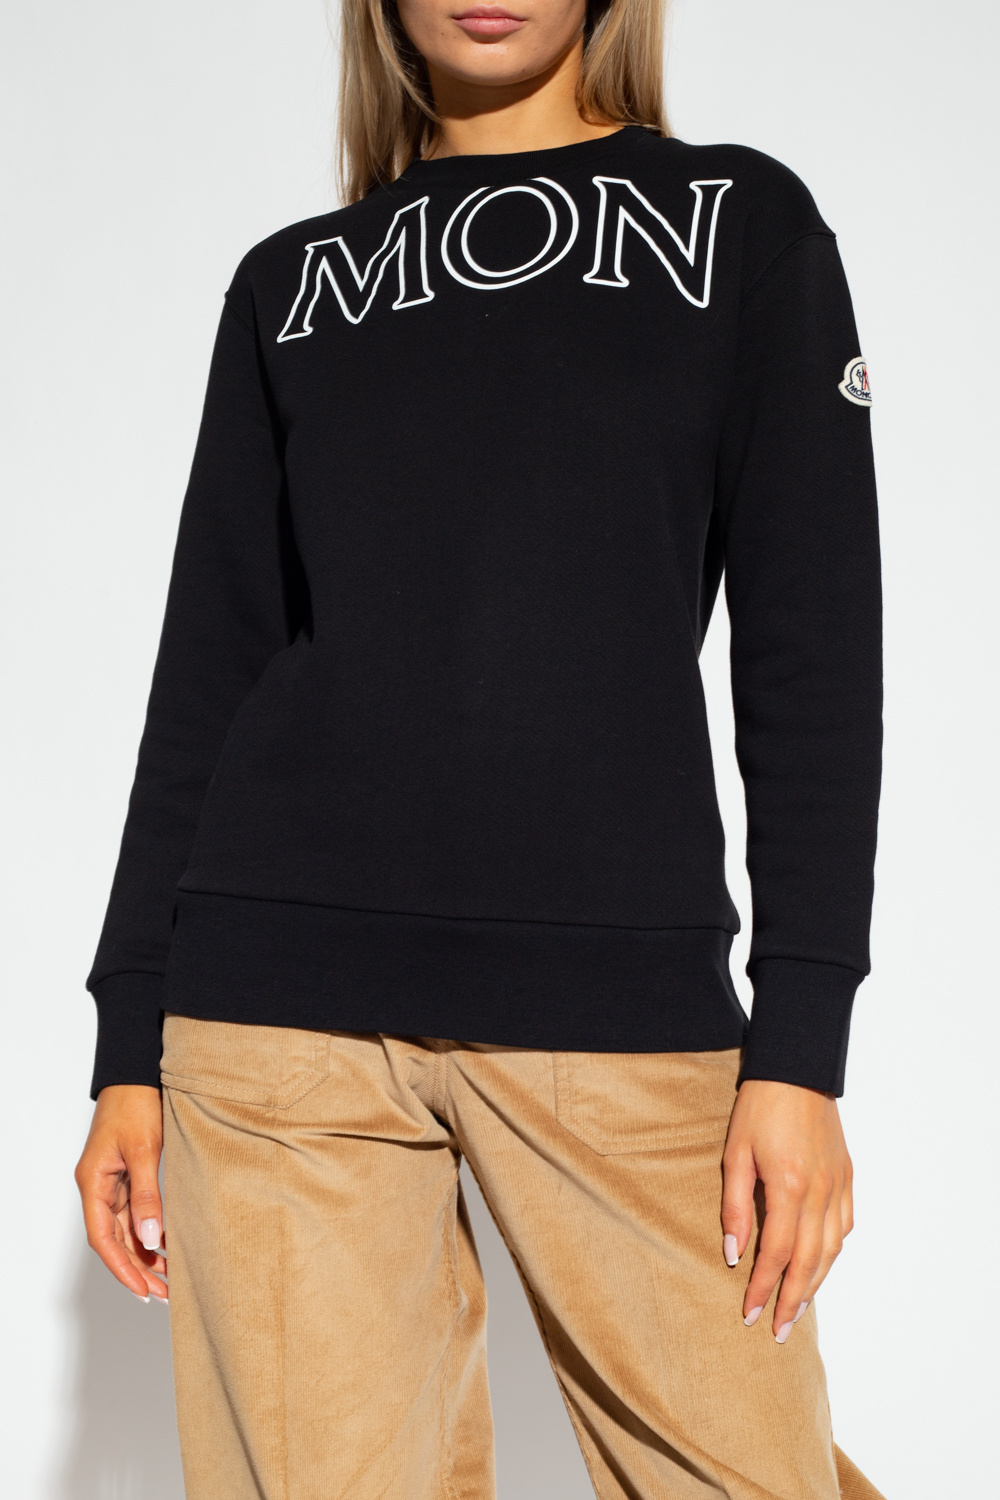 Moncler sweatshirt Club with logo